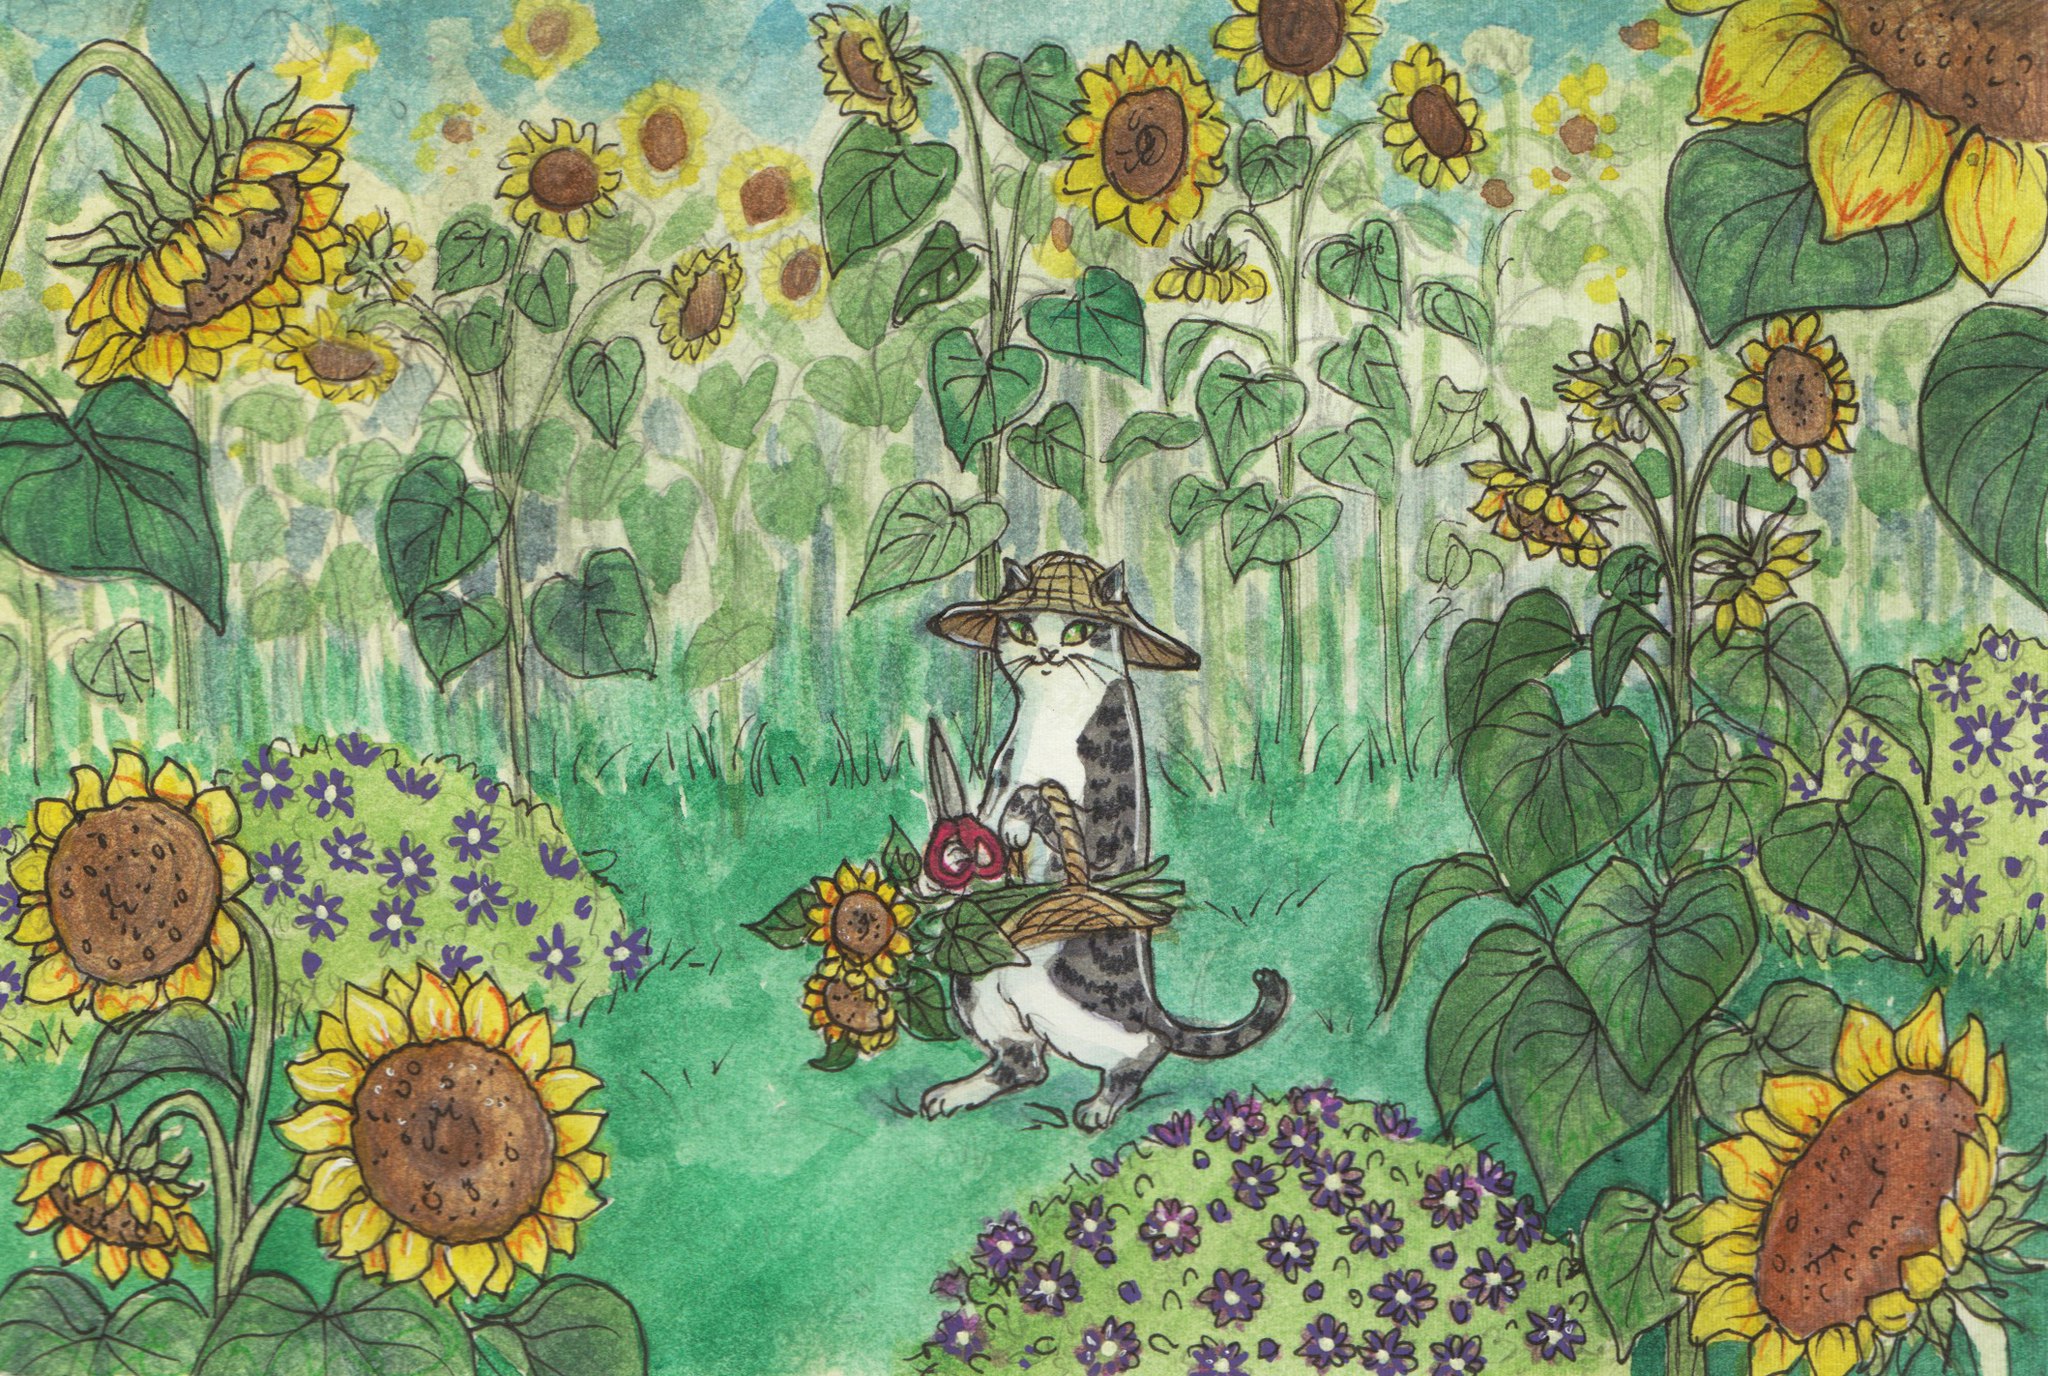 ‘Picking Sunflowers' Original Illustration